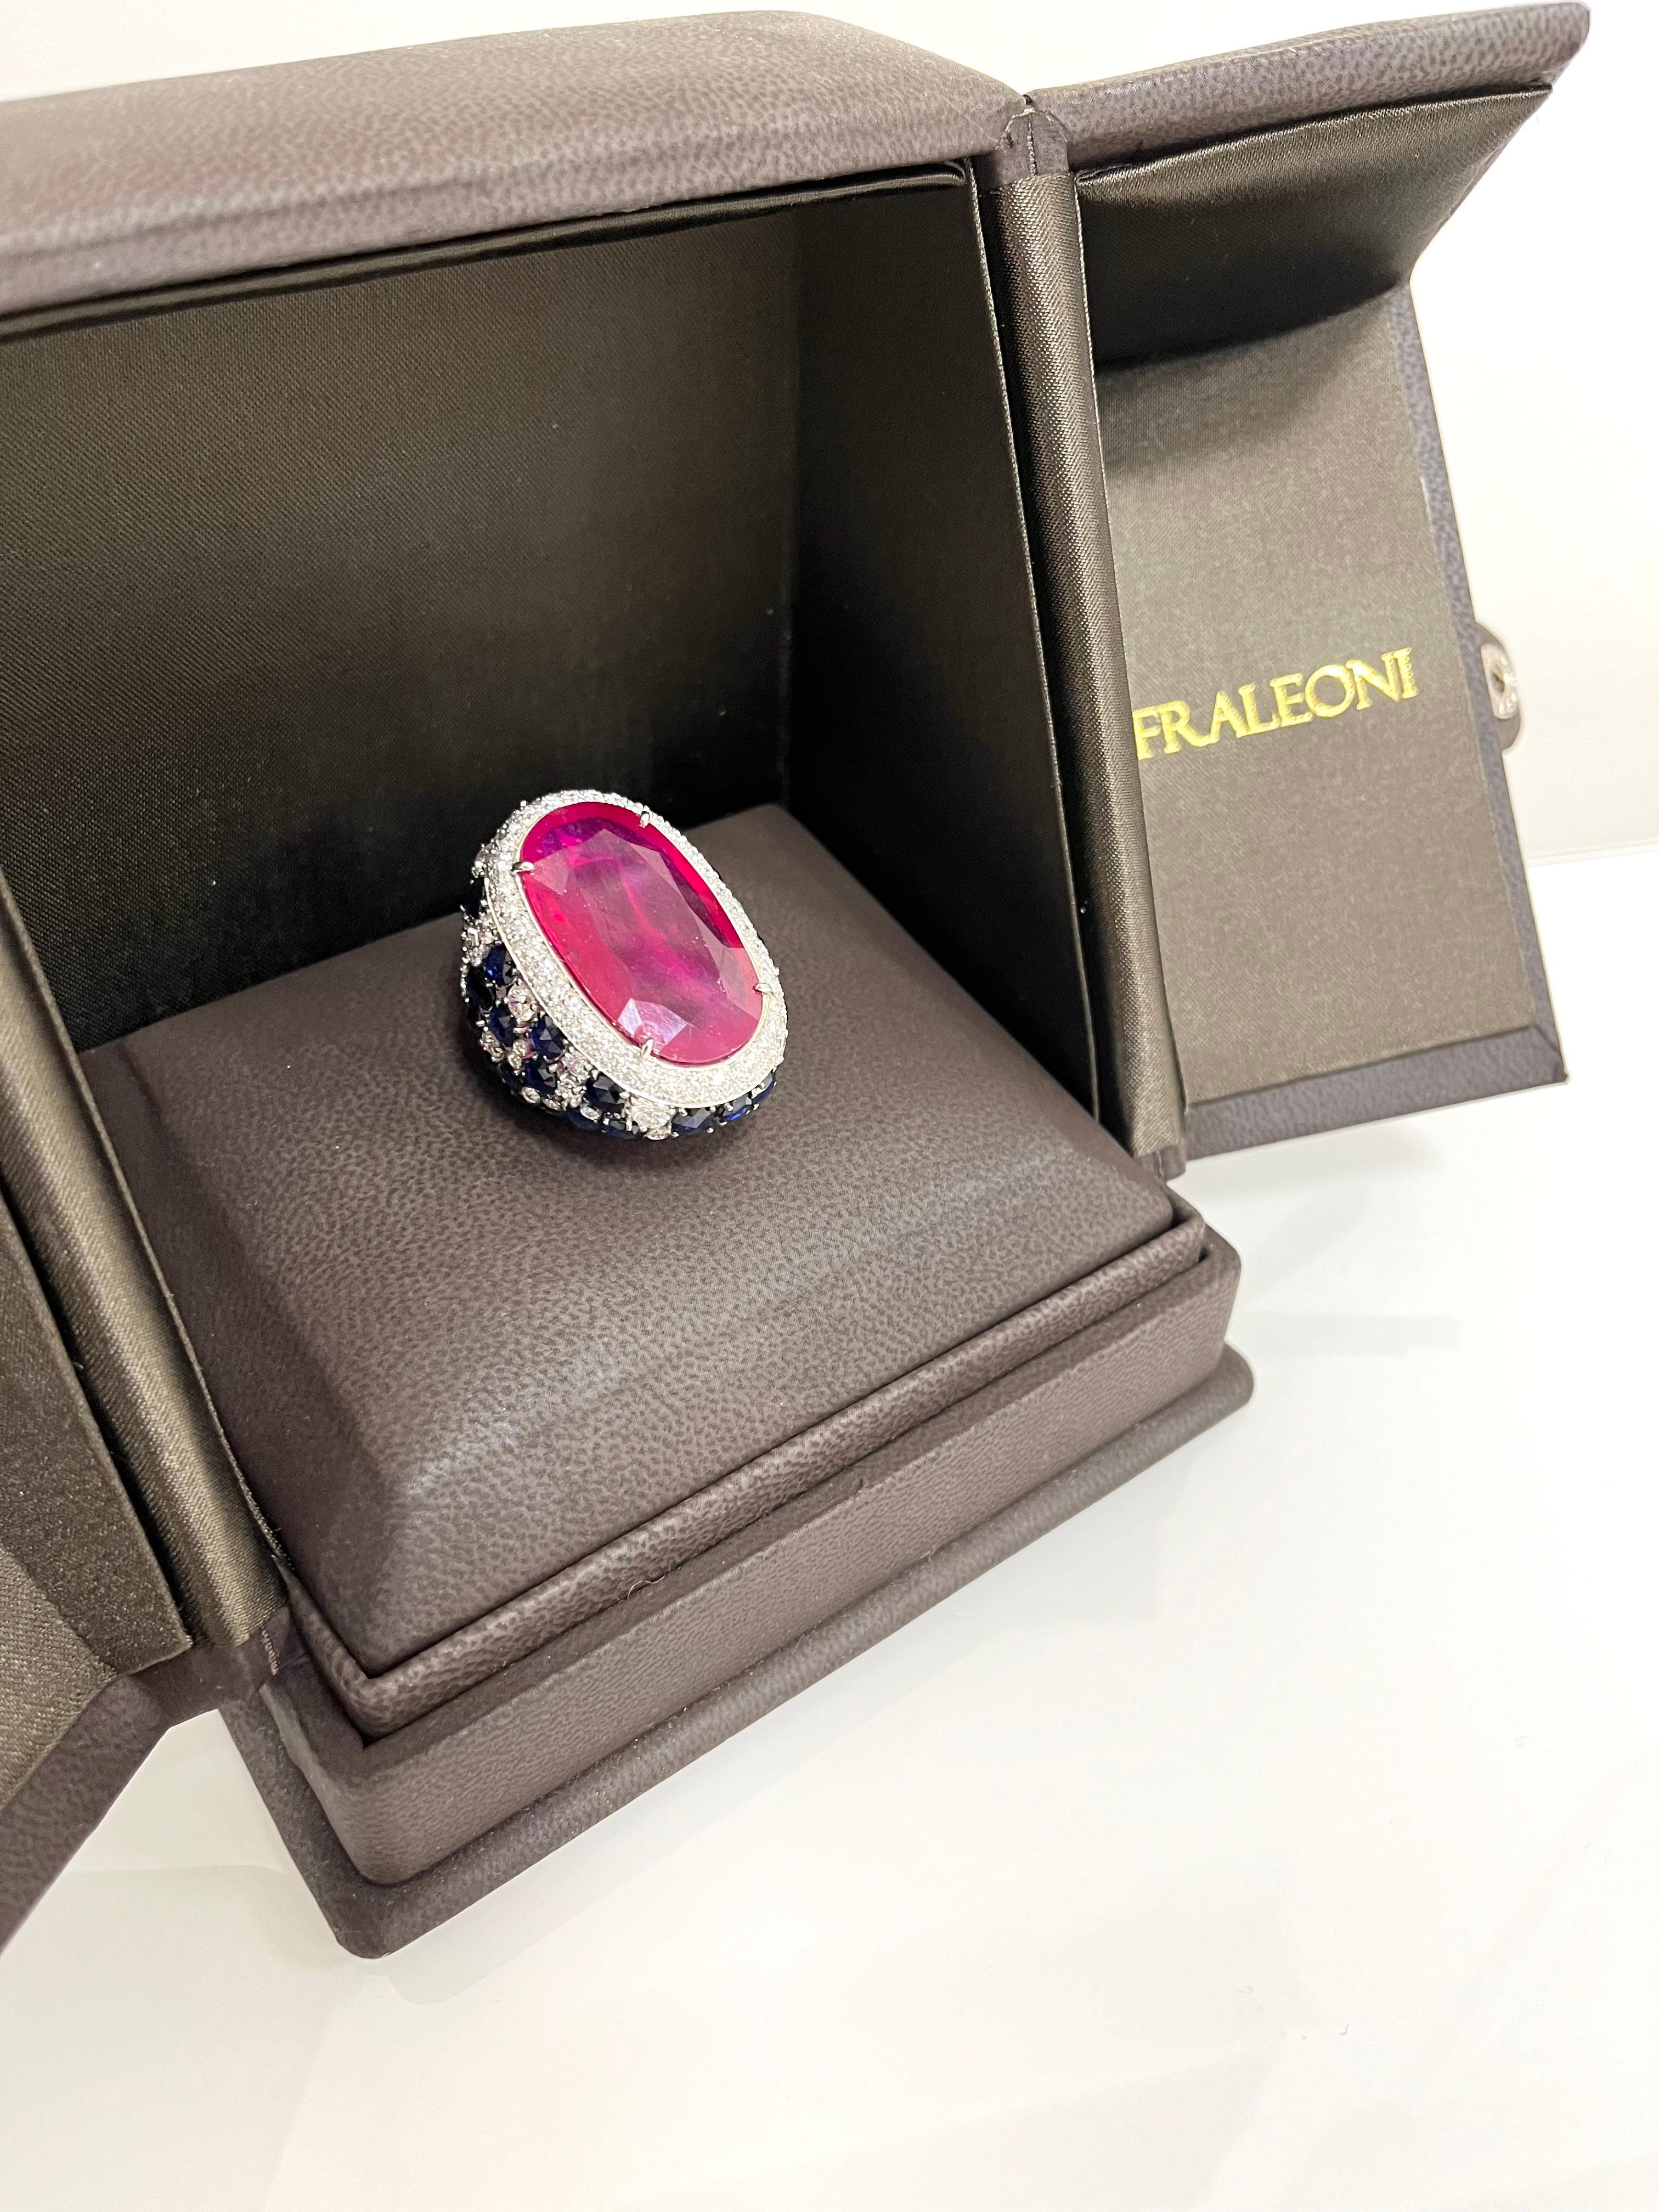 Fraleoni 18 Kt. White Gold Diamond Blue Sapphire Ruby Cocktail Ring For Sale 1